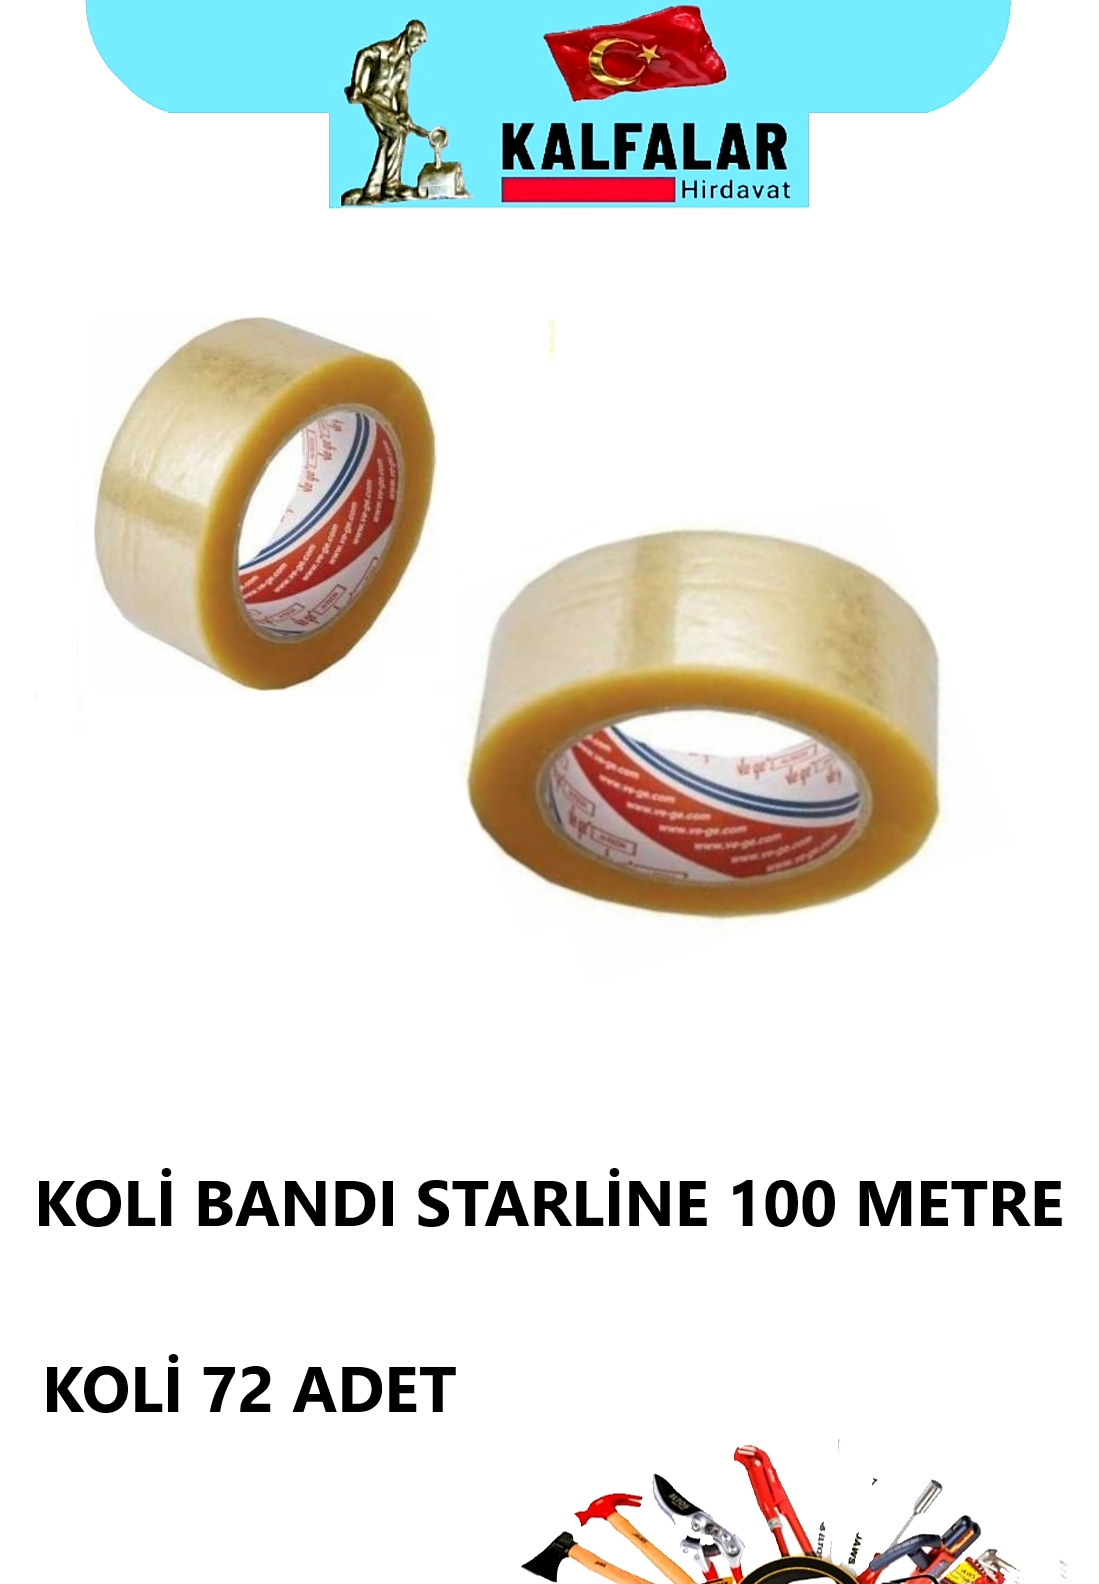 KOLİ BANDI NET 100 METRE STARLİNE